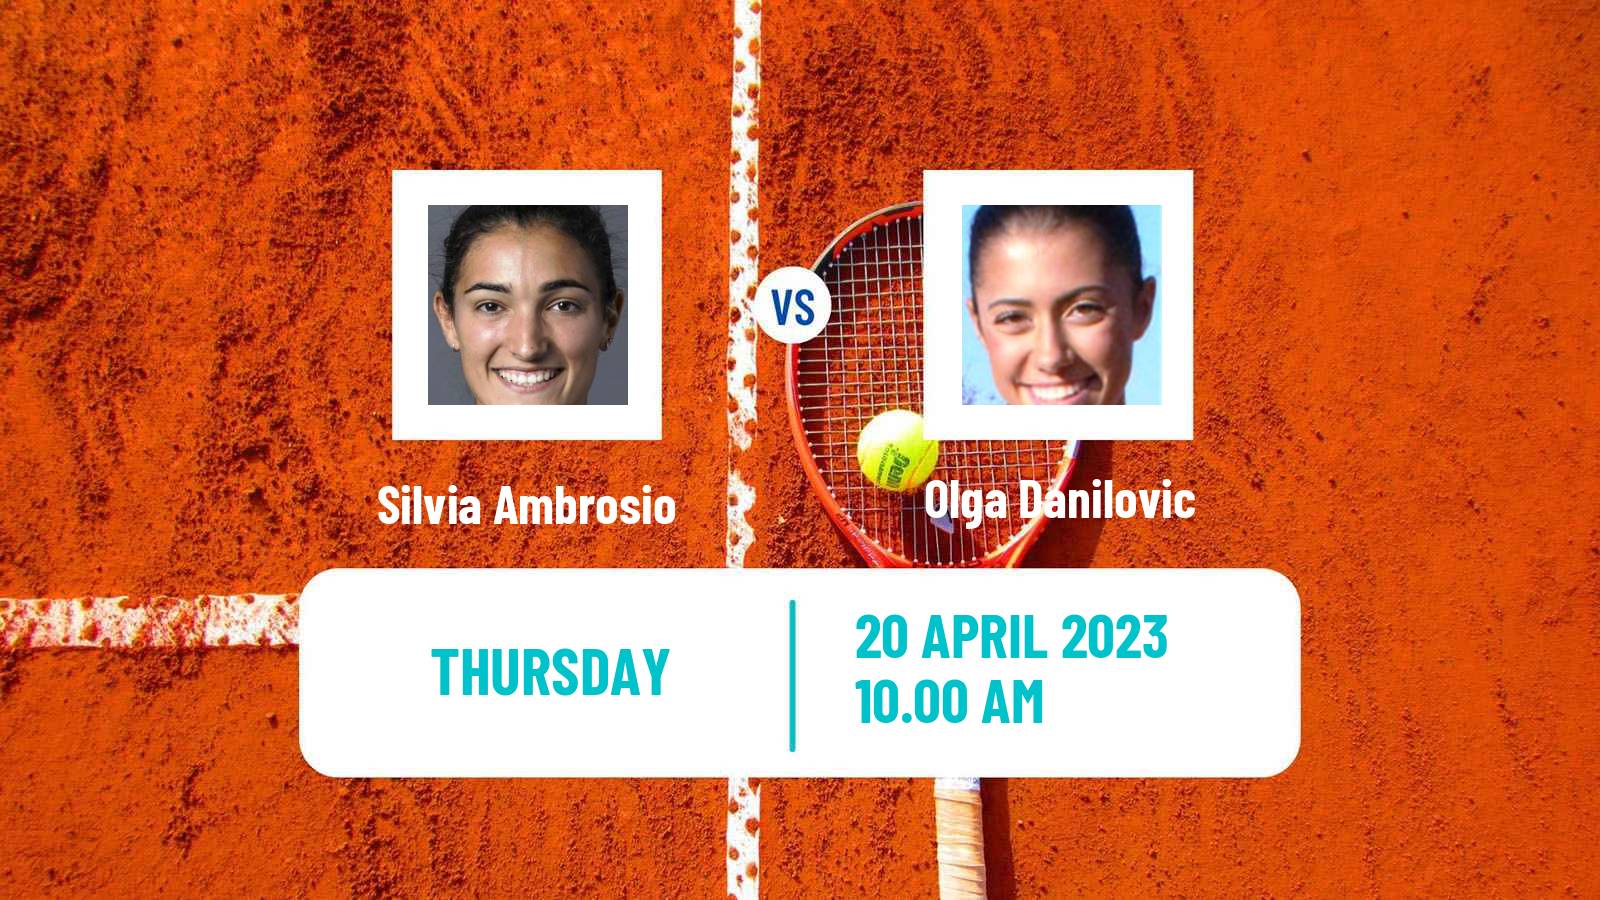 Tennis ITF Tournaments Silvia Ambrosio - Olga Danilovic